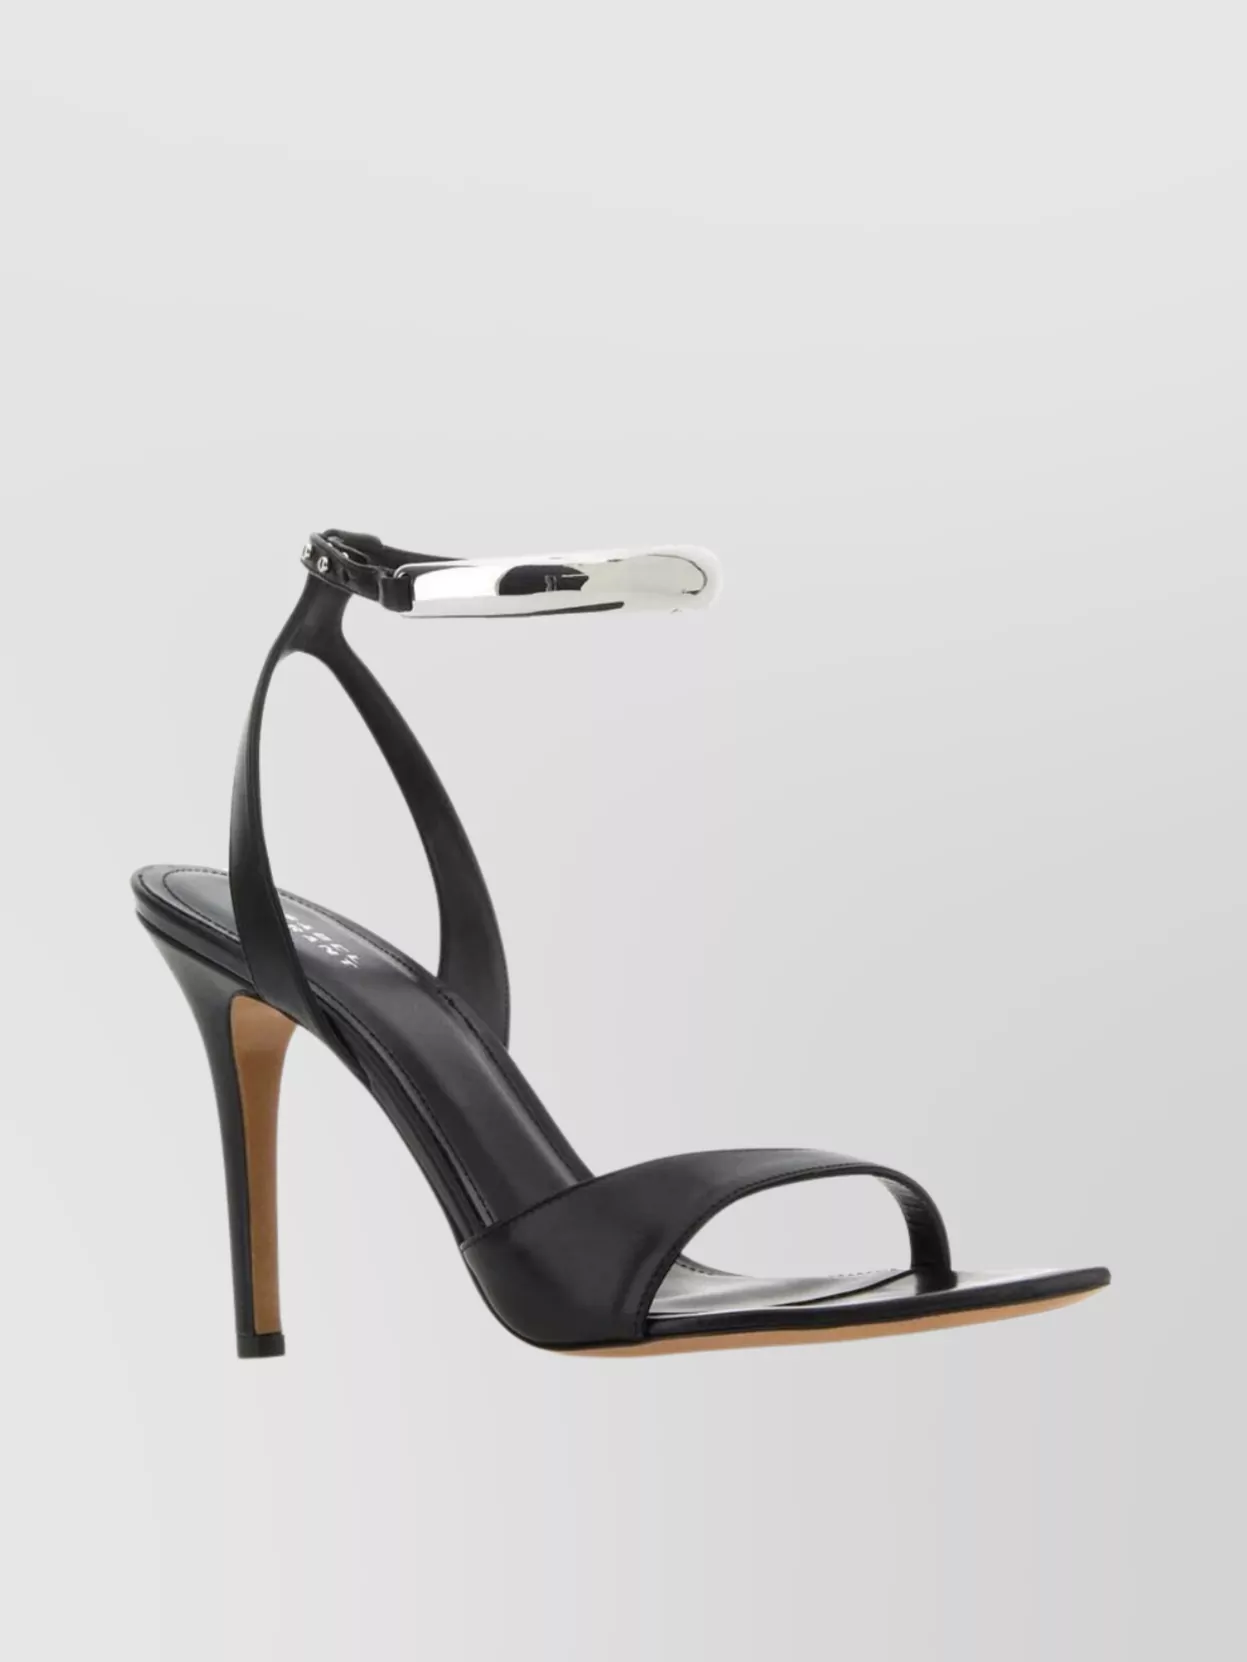 Isabel Marant Sandals Stiletto Heel Open Toe Design In Black